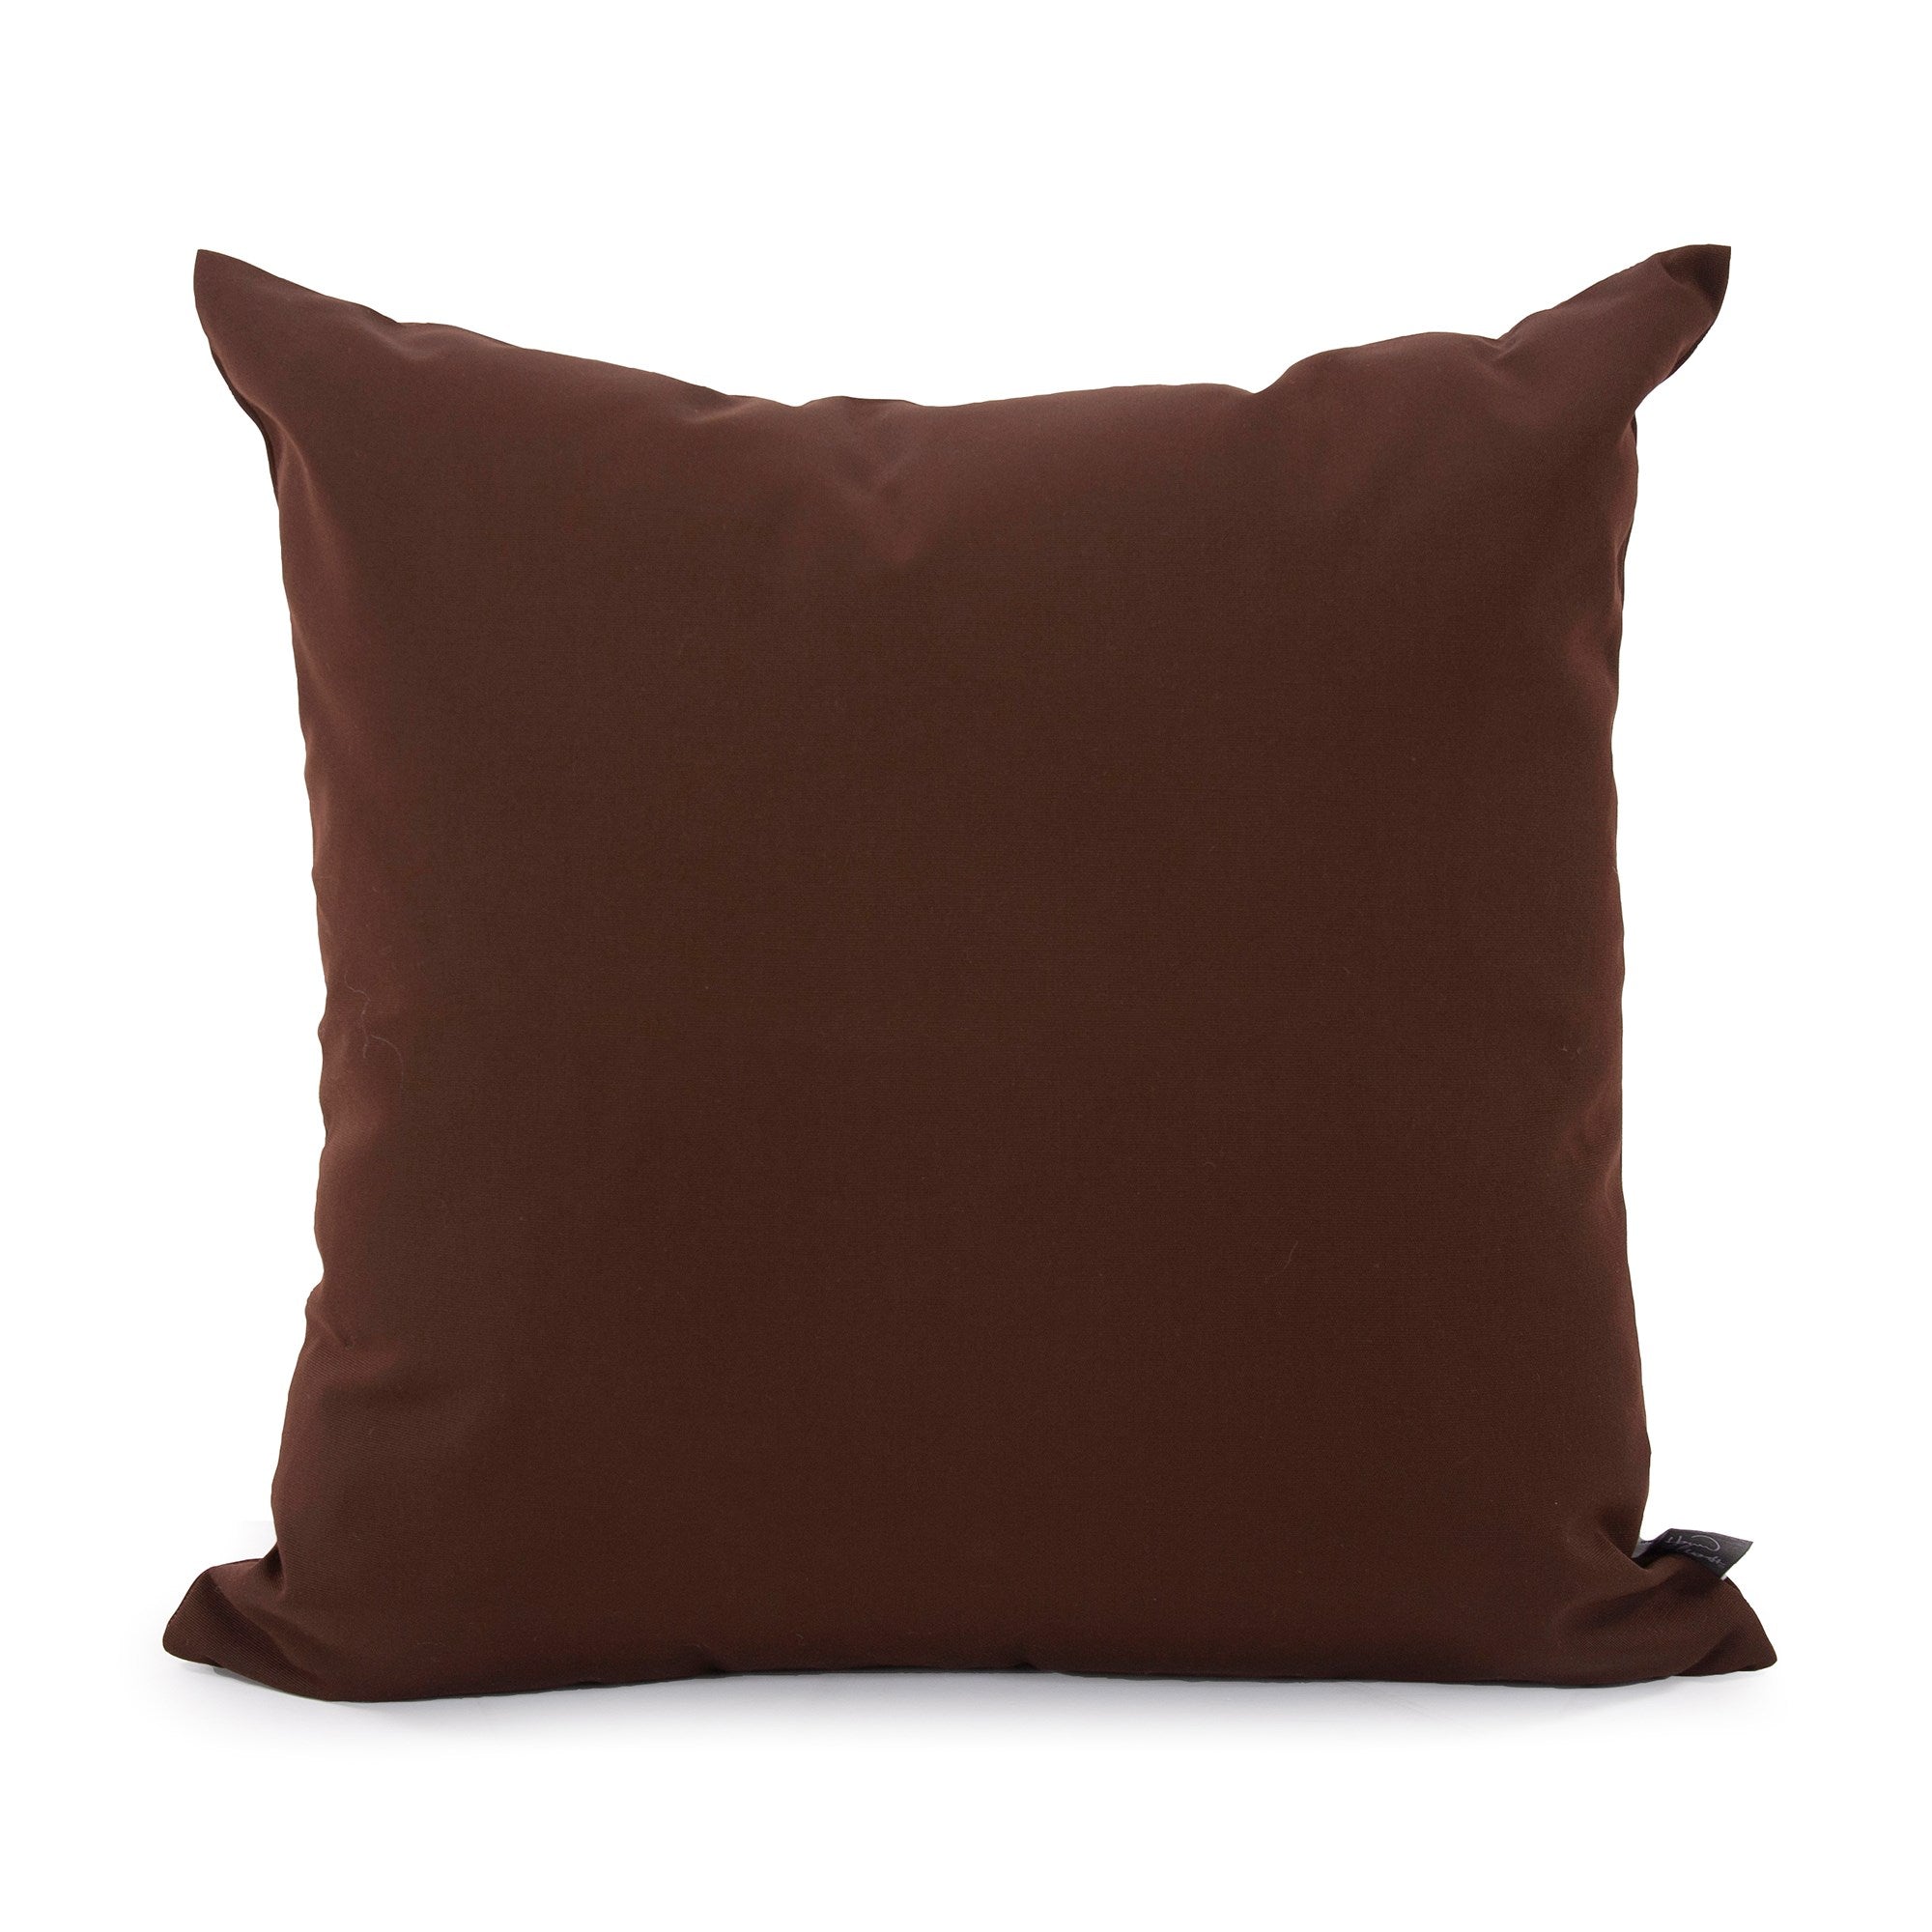 Seascape Chocolate Pillow- 20" x 20"